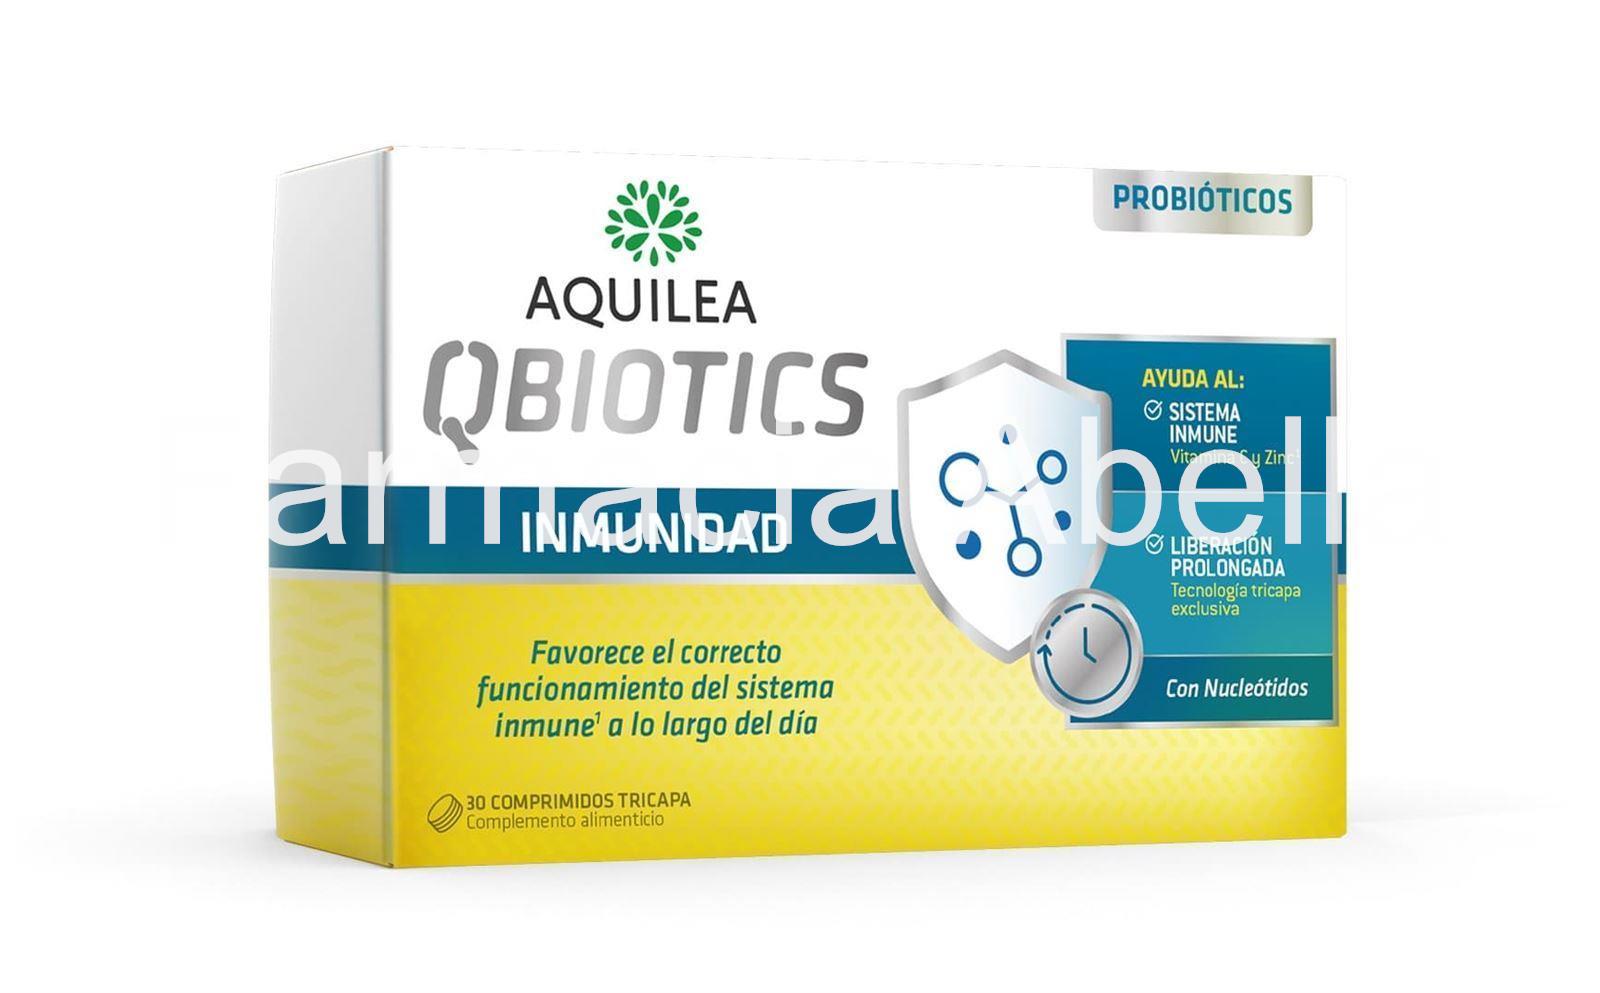 Aquilea Qbiotics Inmunidad 30 comprimidos - Imagen 1